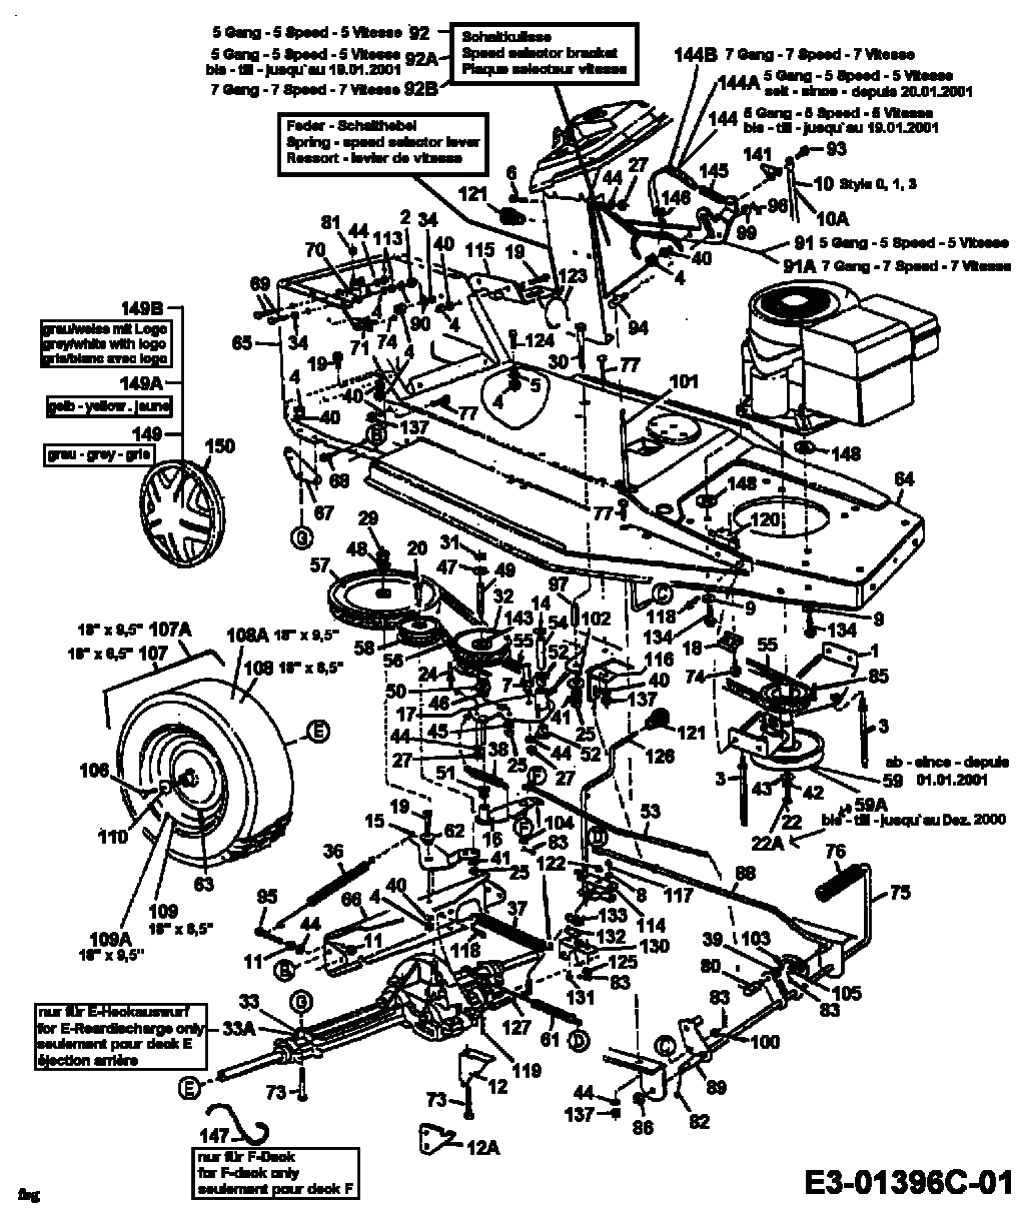 MTD Артикул 13A1450C600 (год выпуска 2002). Система привода, шкив двигателя, педали, задние колеса